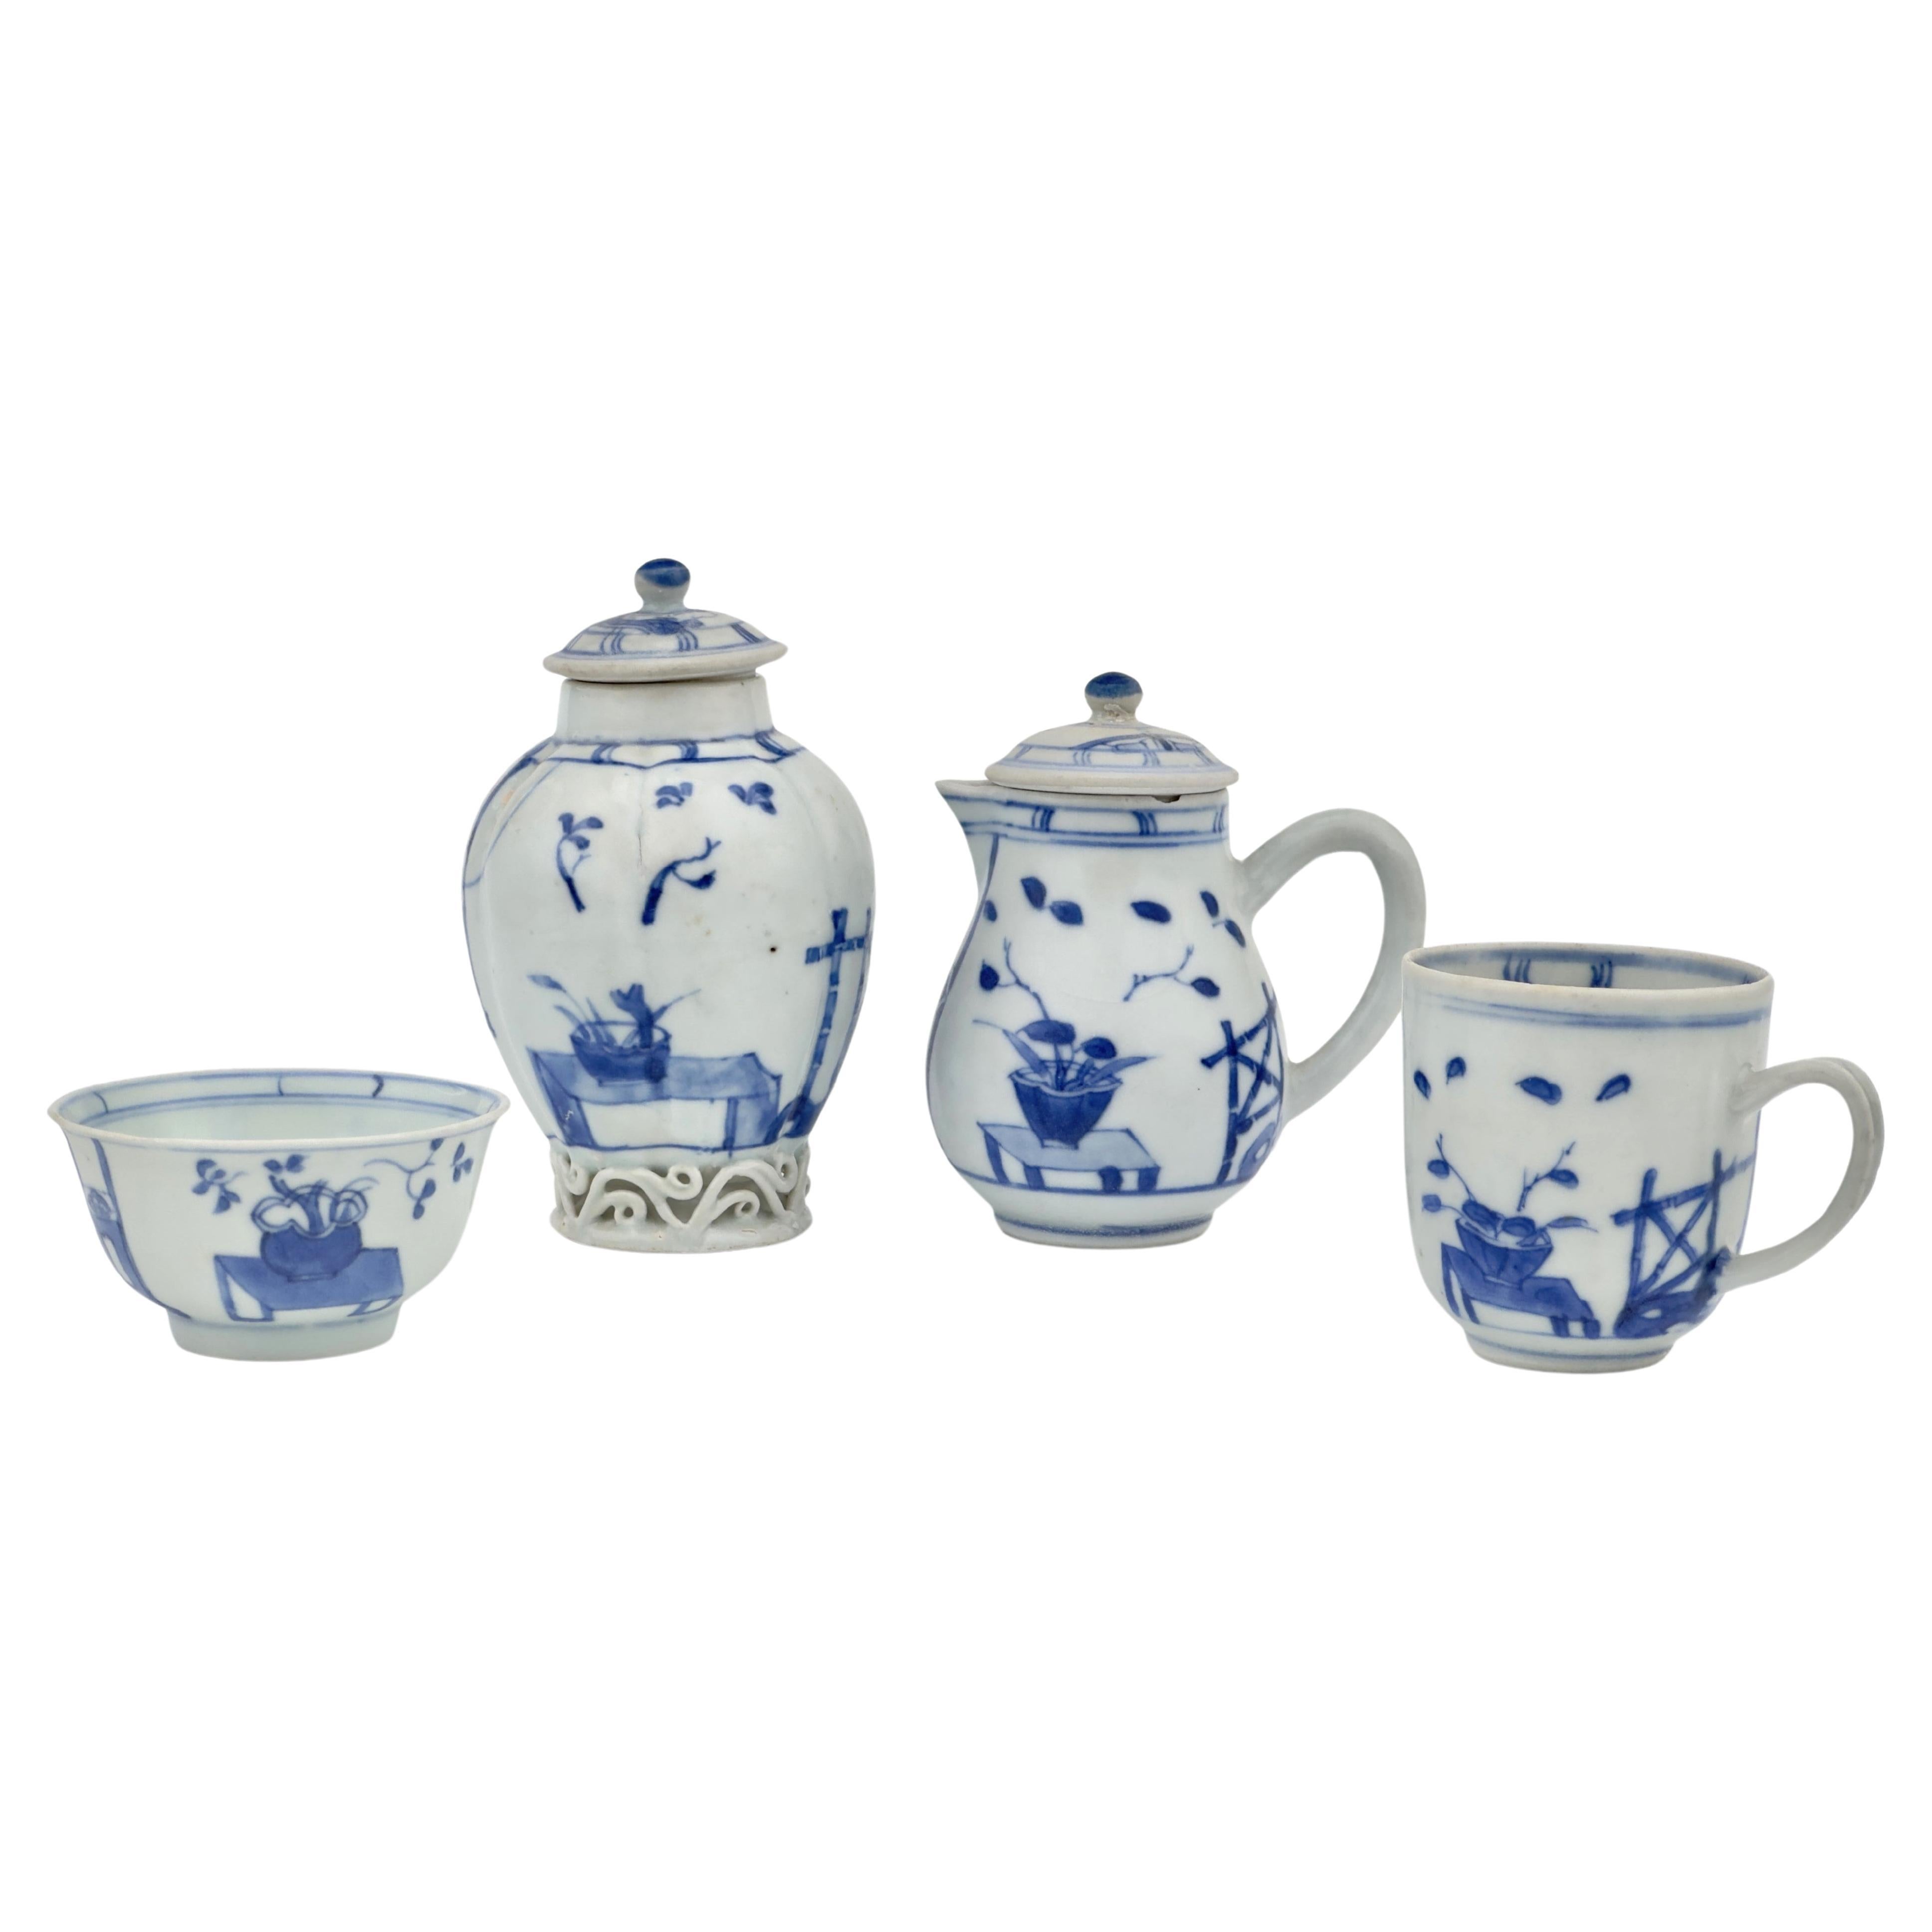 Imari Pavilion Pattern Blue and White Tea Set c 1725, Qing Dynasty, Yongzheng Re For Sale